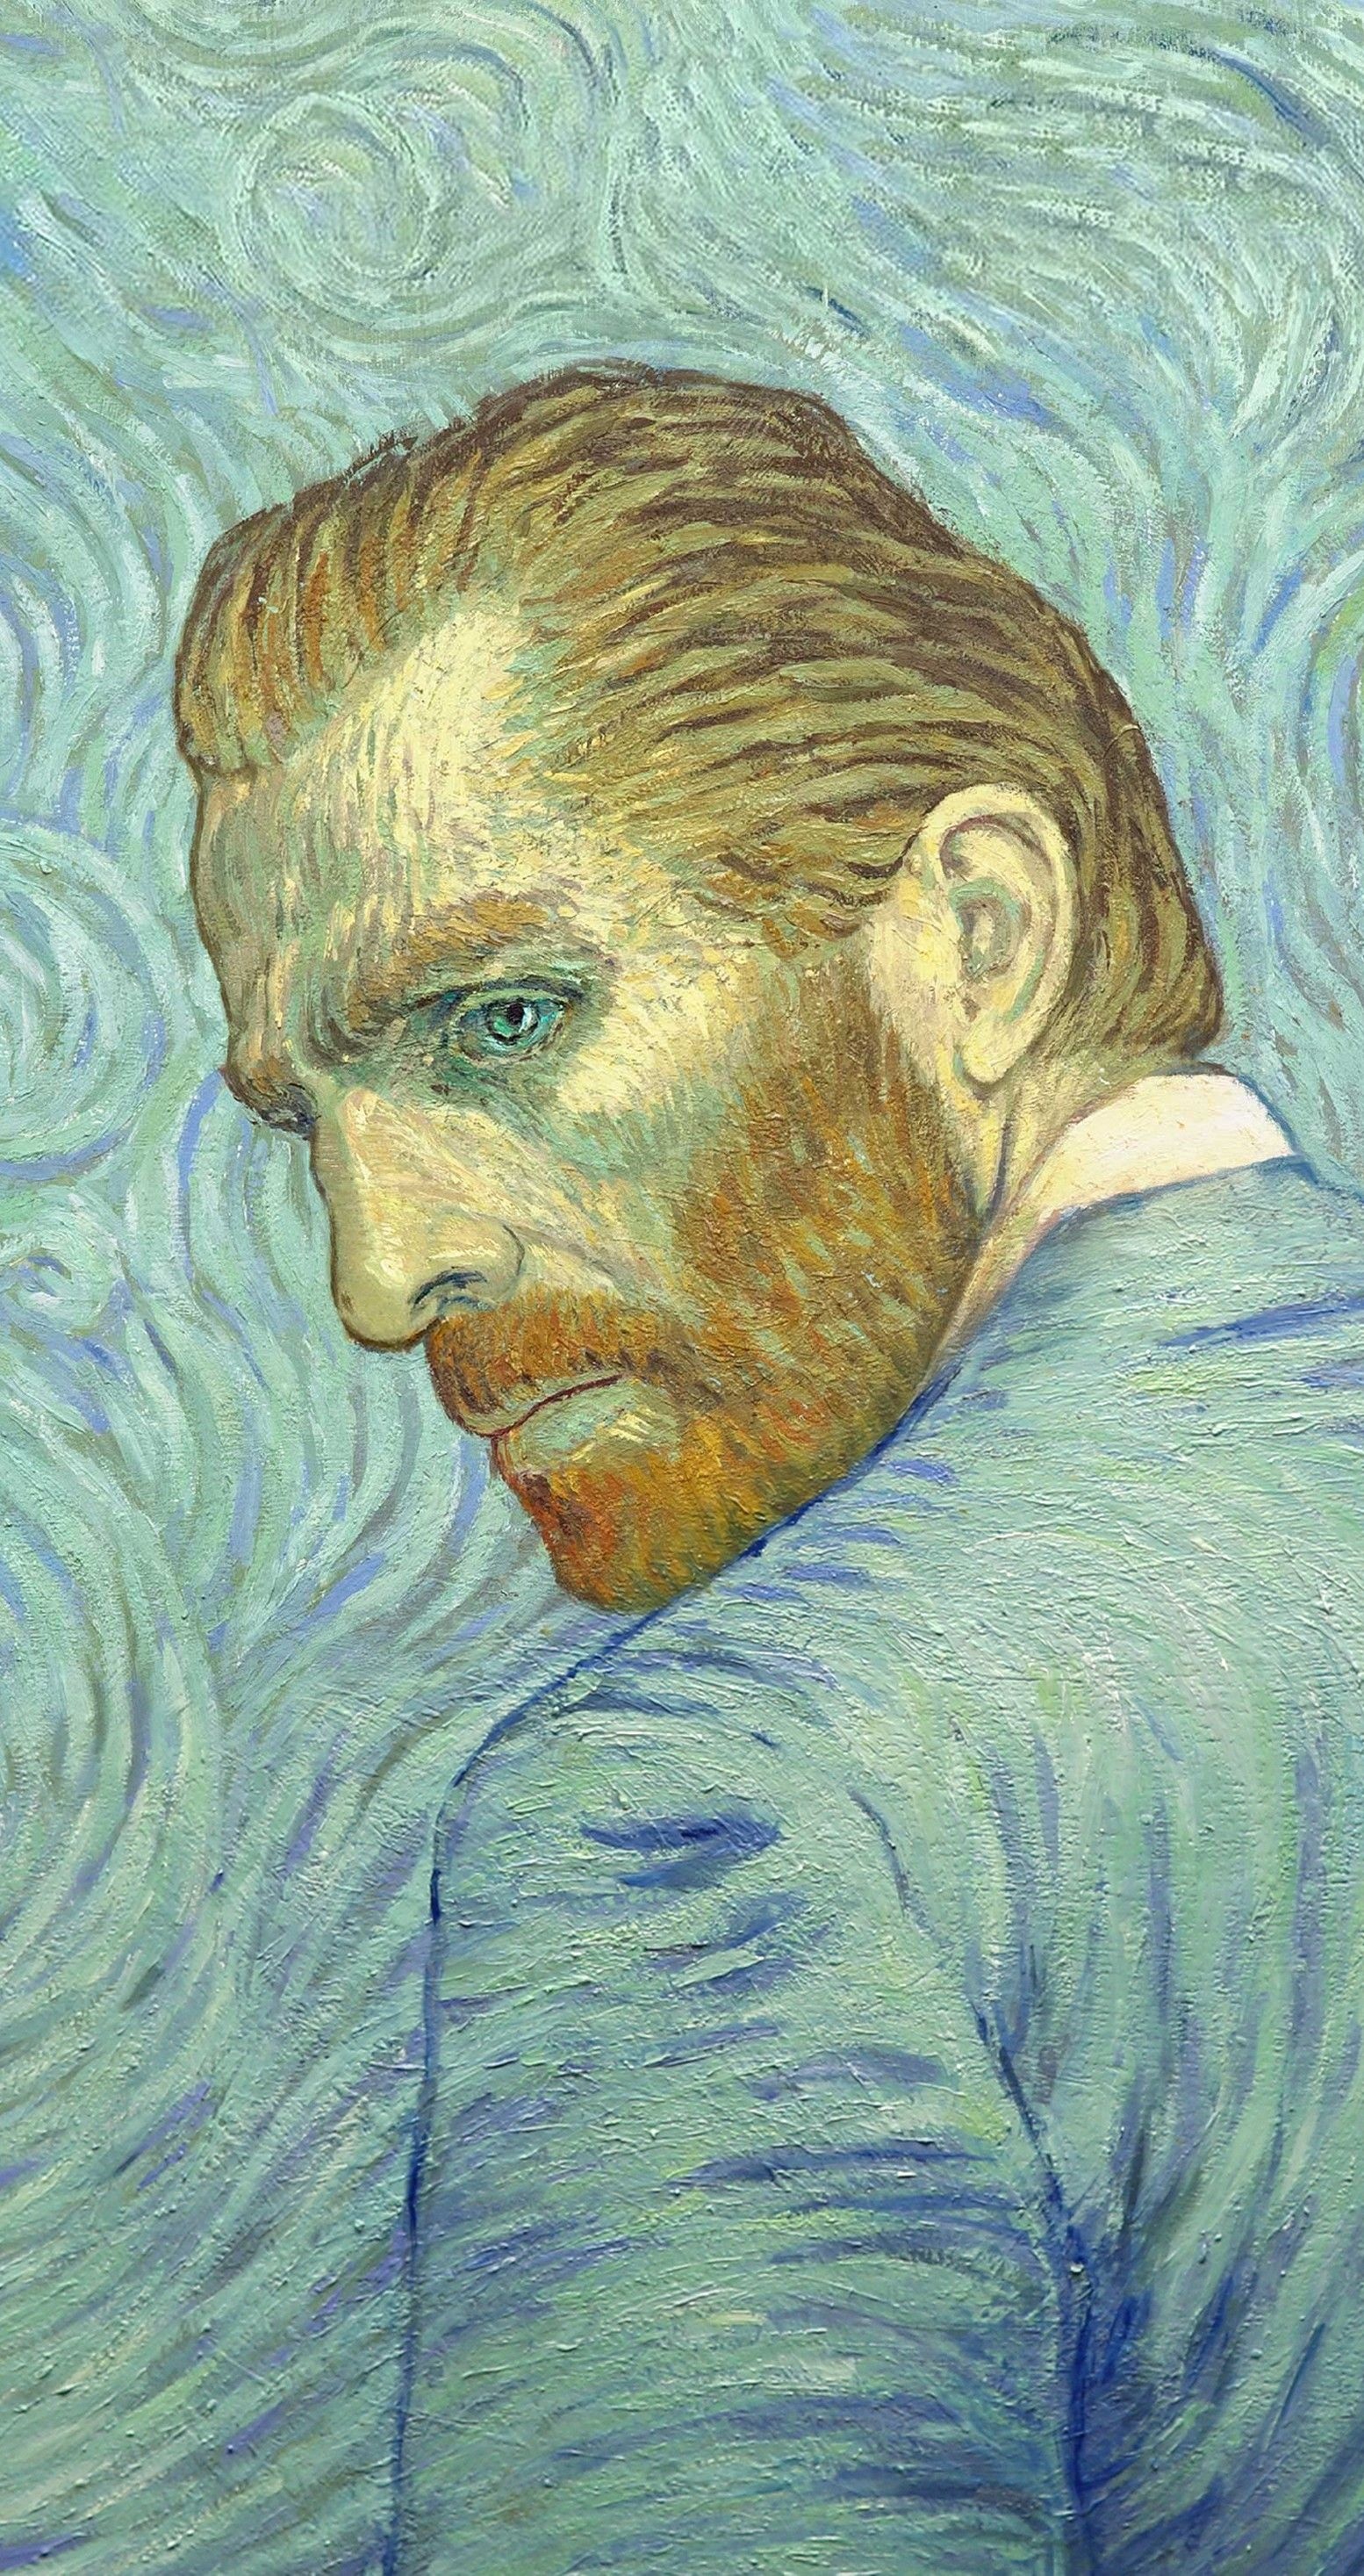 HD wallpaper, Iphone Hd Vincent Van Gogh Wallpaper Image, 1560X2940 Hd Phone, Van Gogh Artistry, Captivating Wallpaper, Art Movie Tribute, Vincent Van Gogh